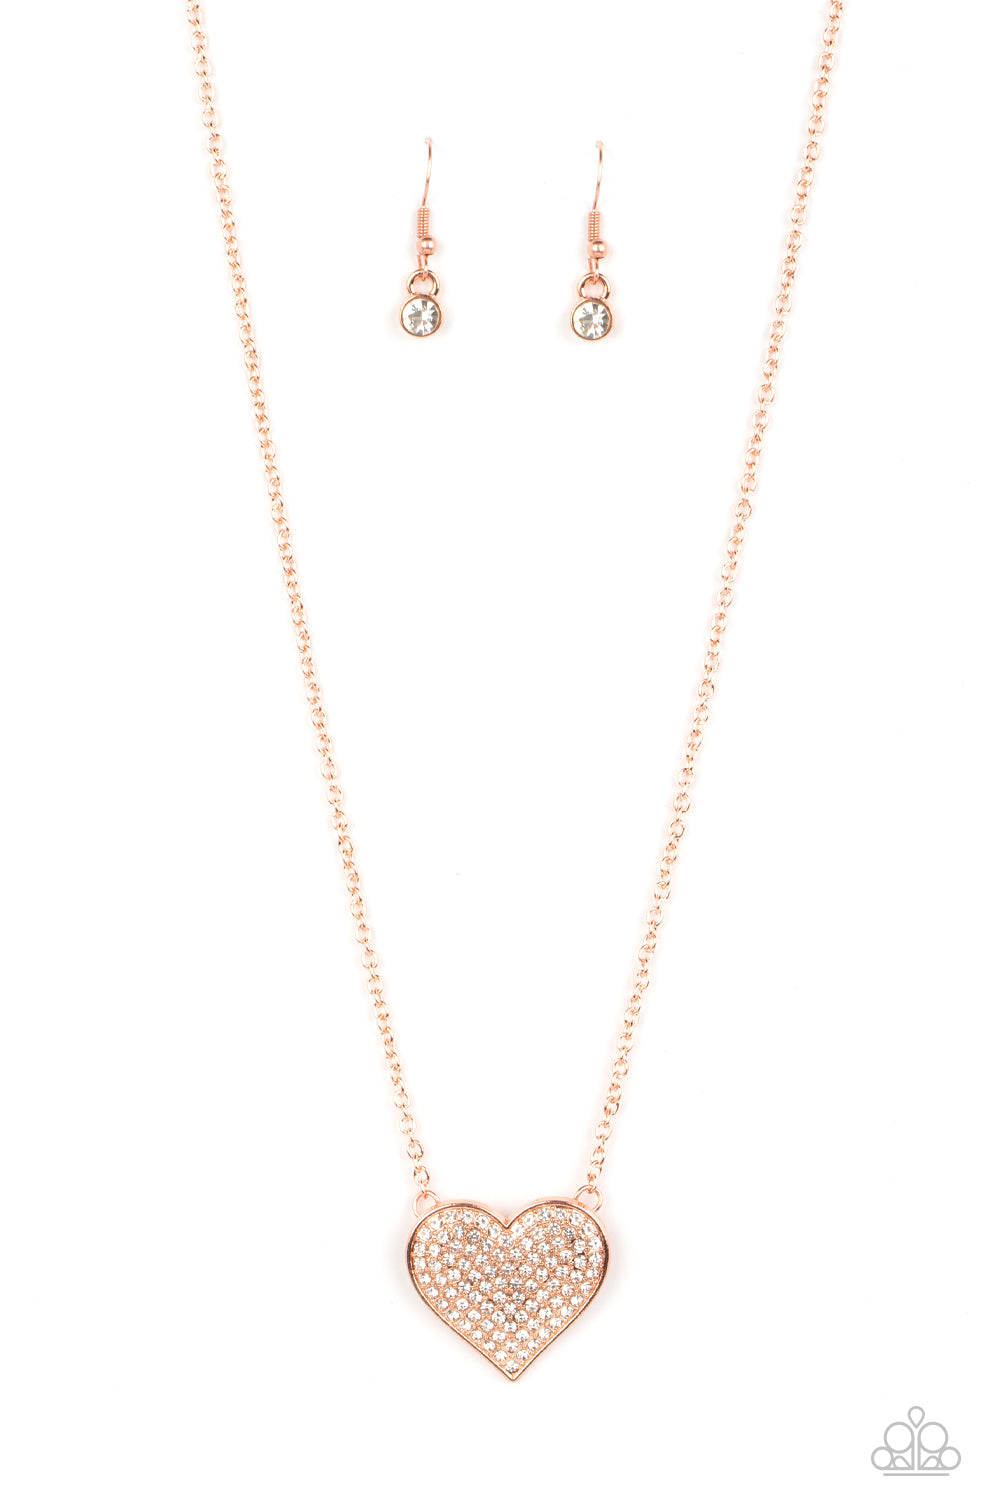 Spellbinding Sweetheart - Copper Necklace